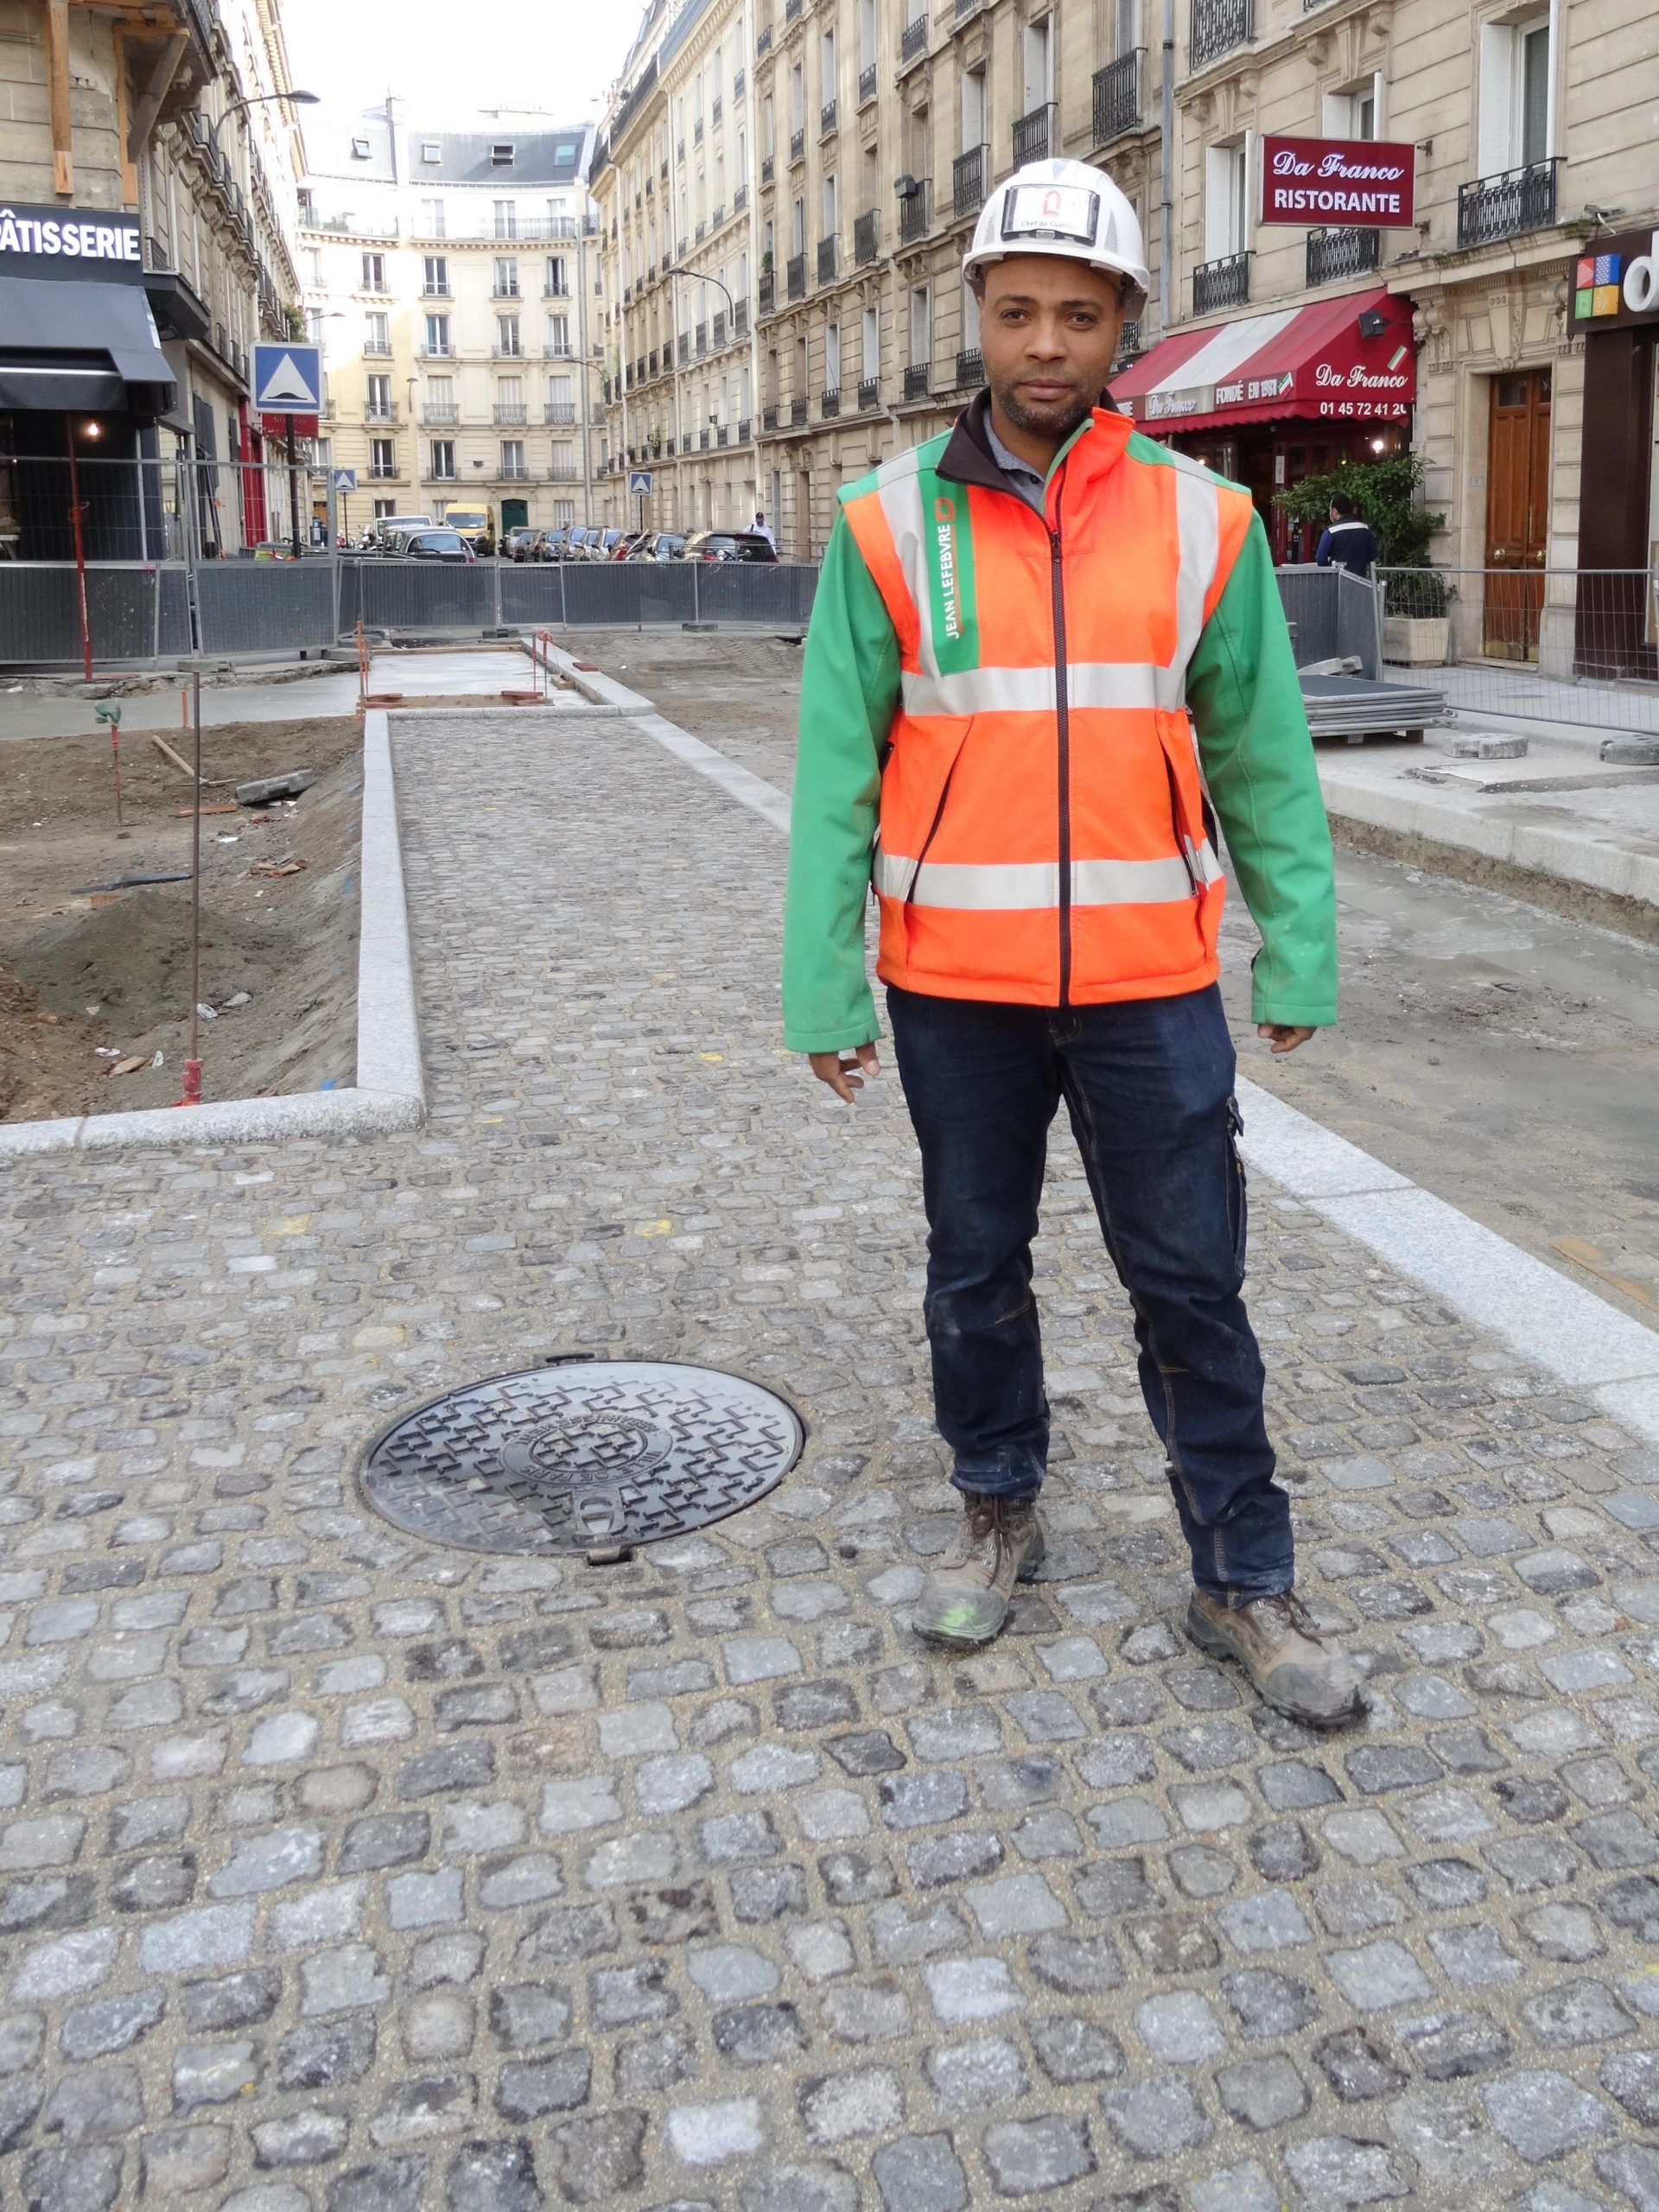 Rencontre : interview de Mohamed Battah, chef de chantier